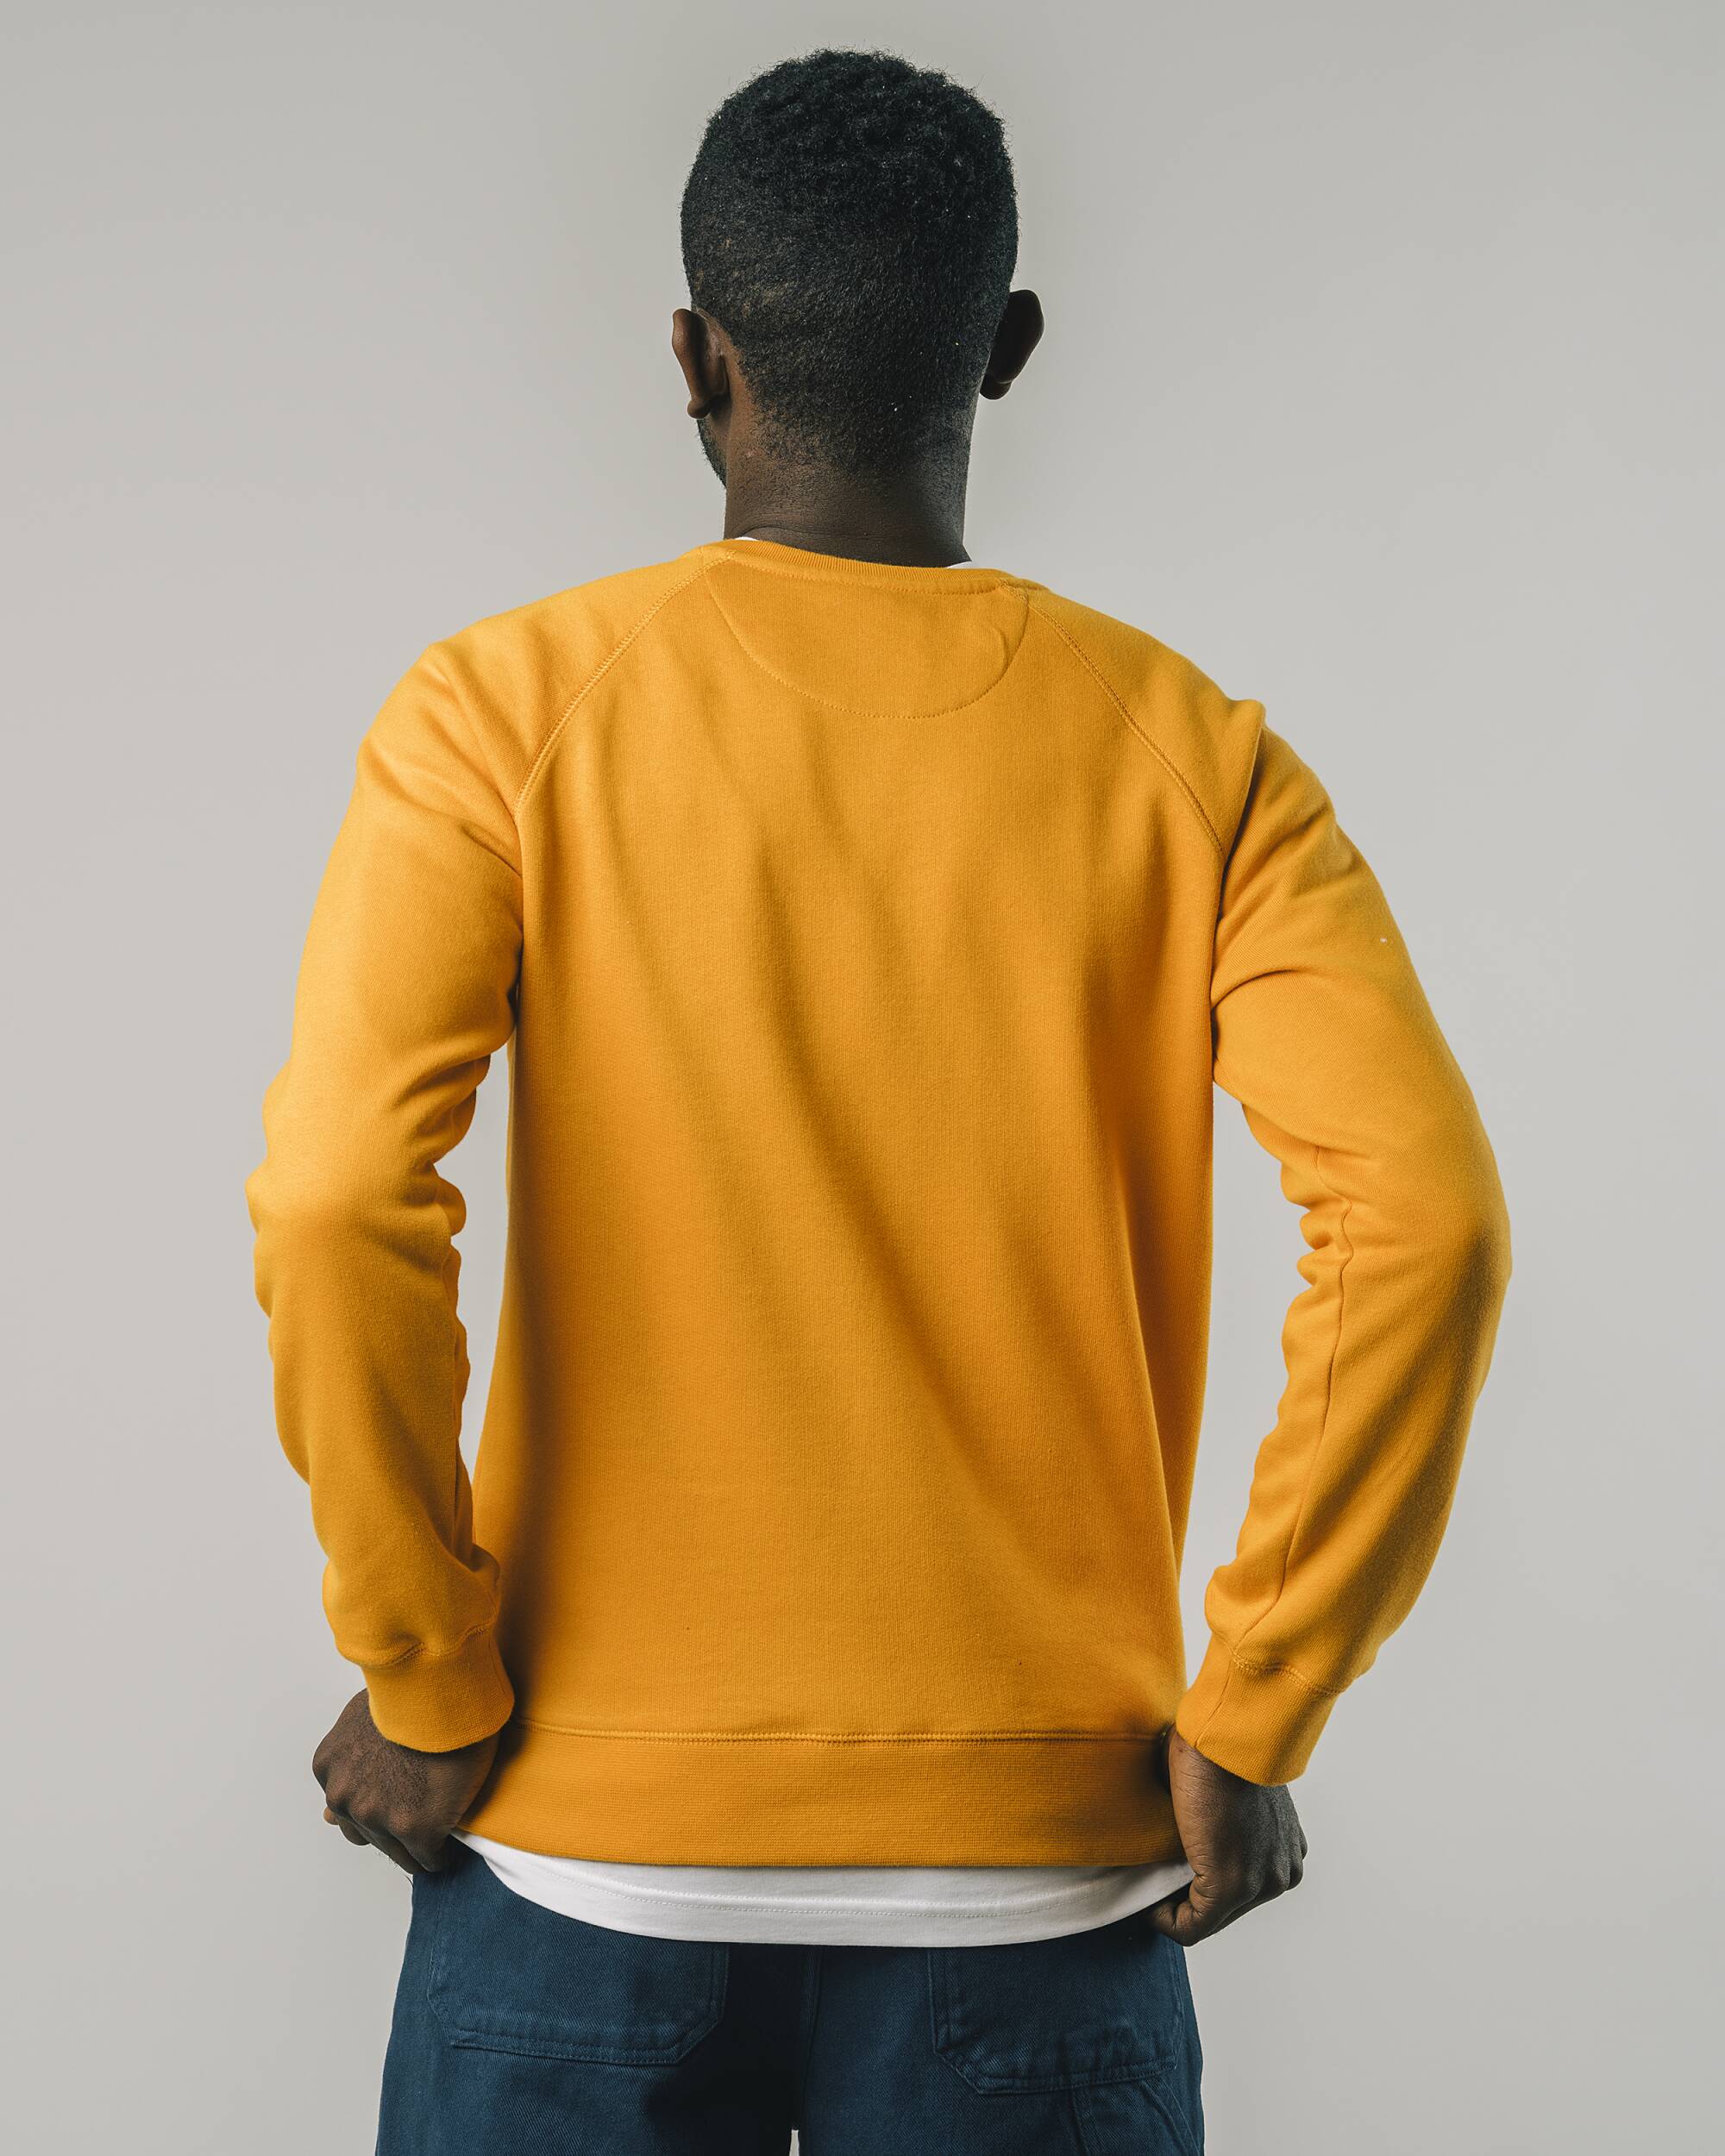 Sweatshirt "The Guardian Desert Sun" in yellow made from 100% organic cotton from Brava Fabrics